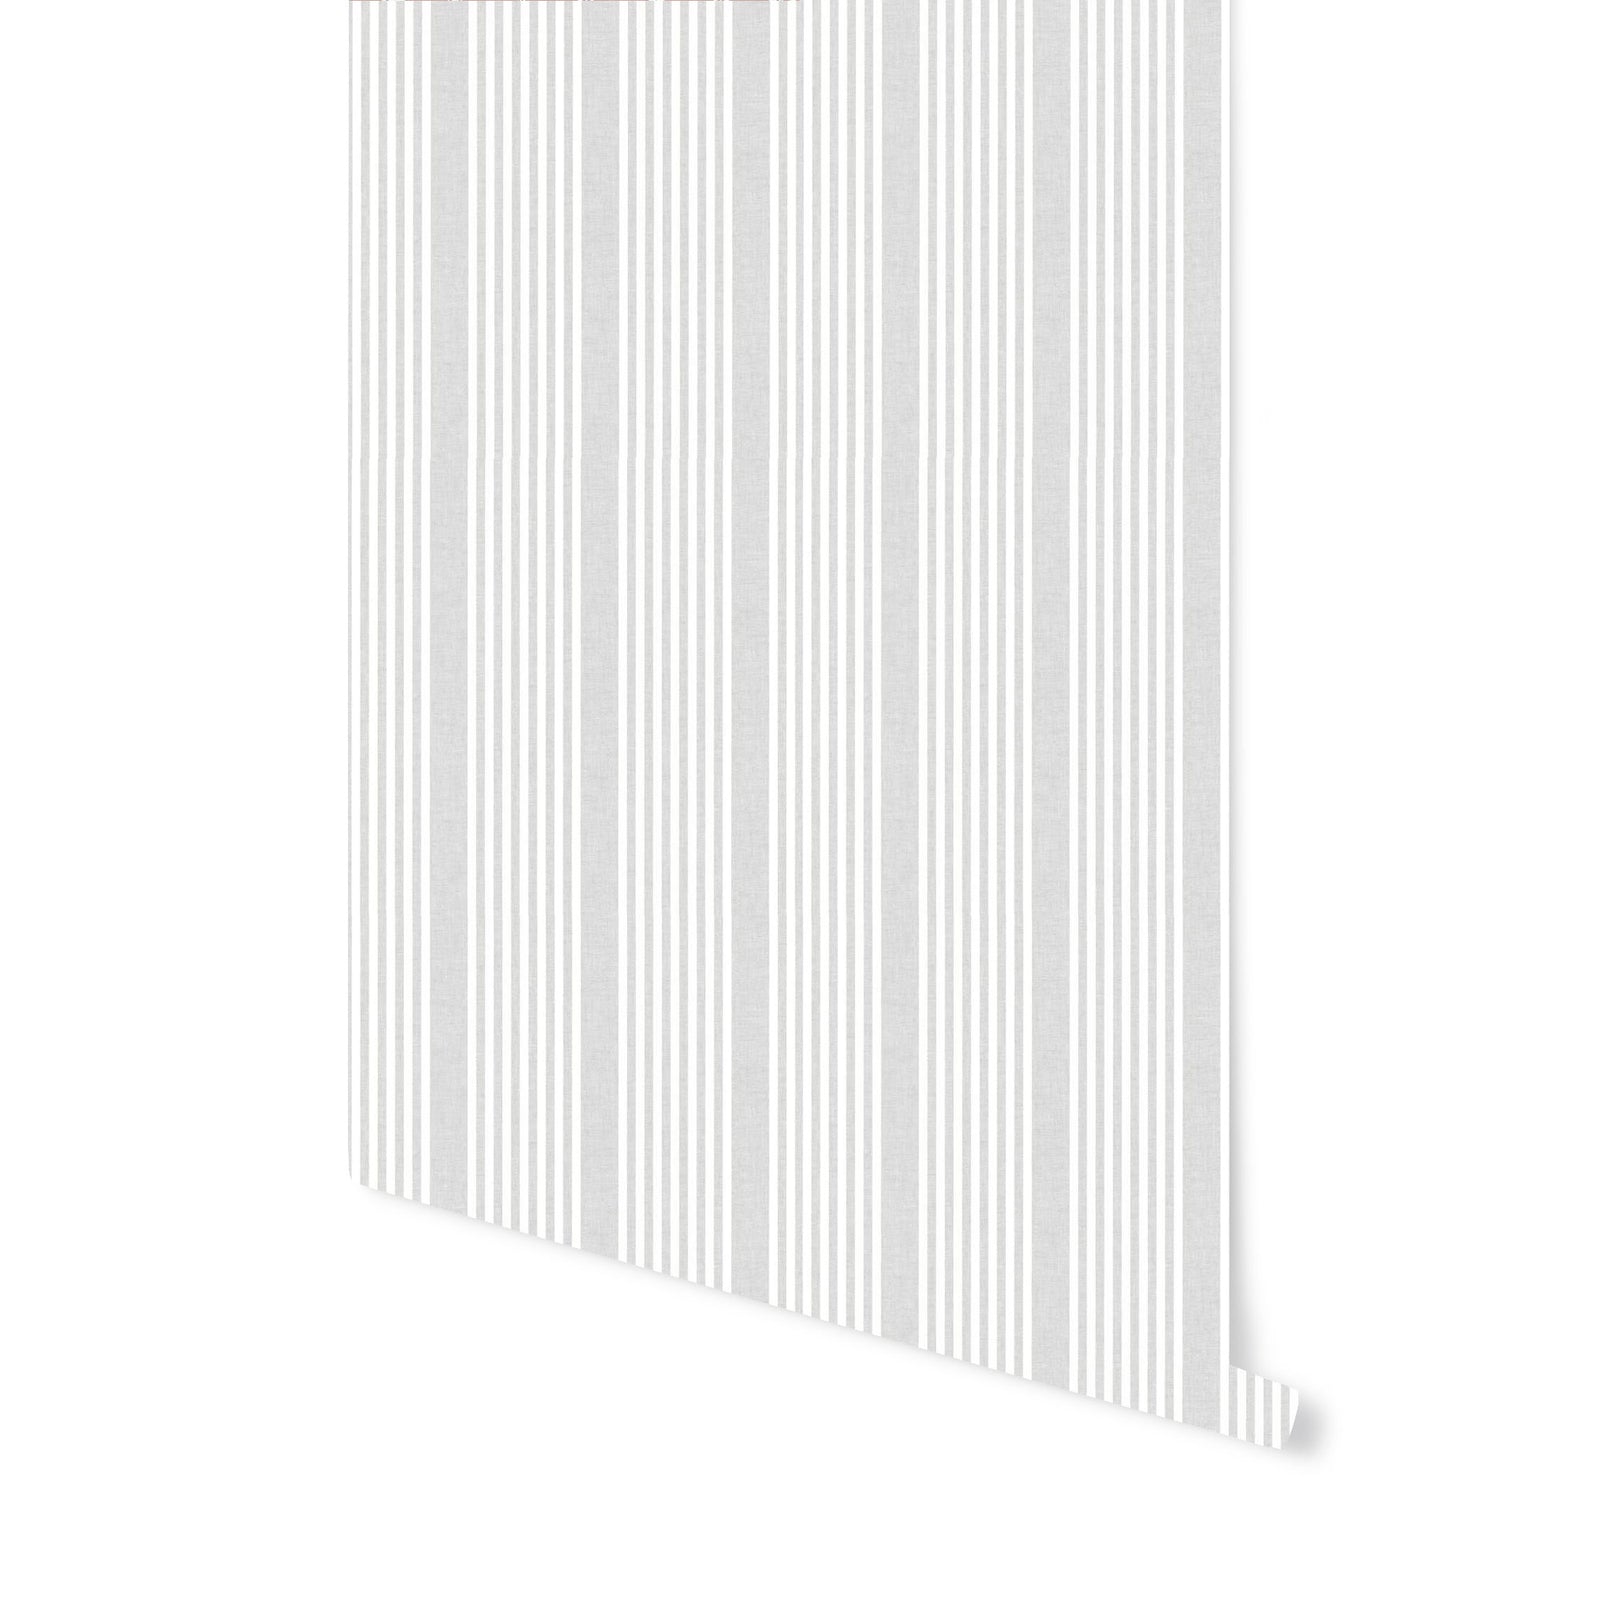 French Stripe Wallpaper in Grey